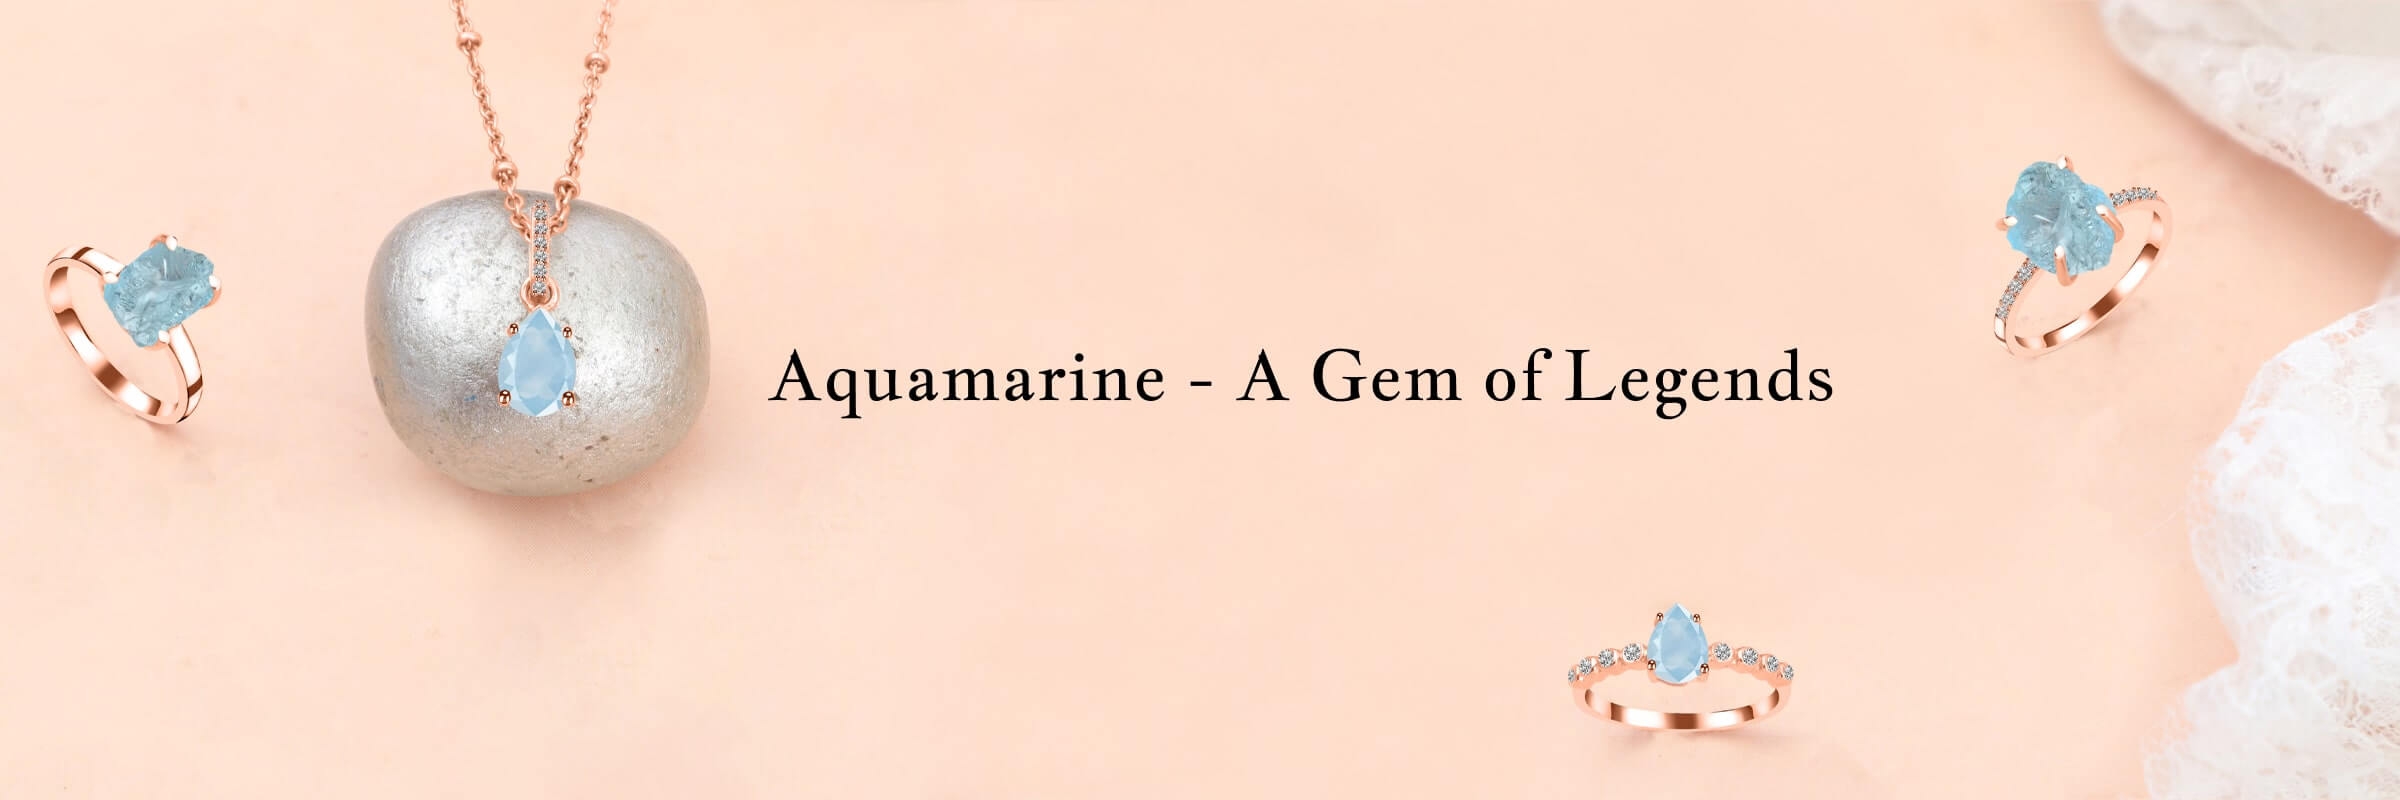 Aquamarine History